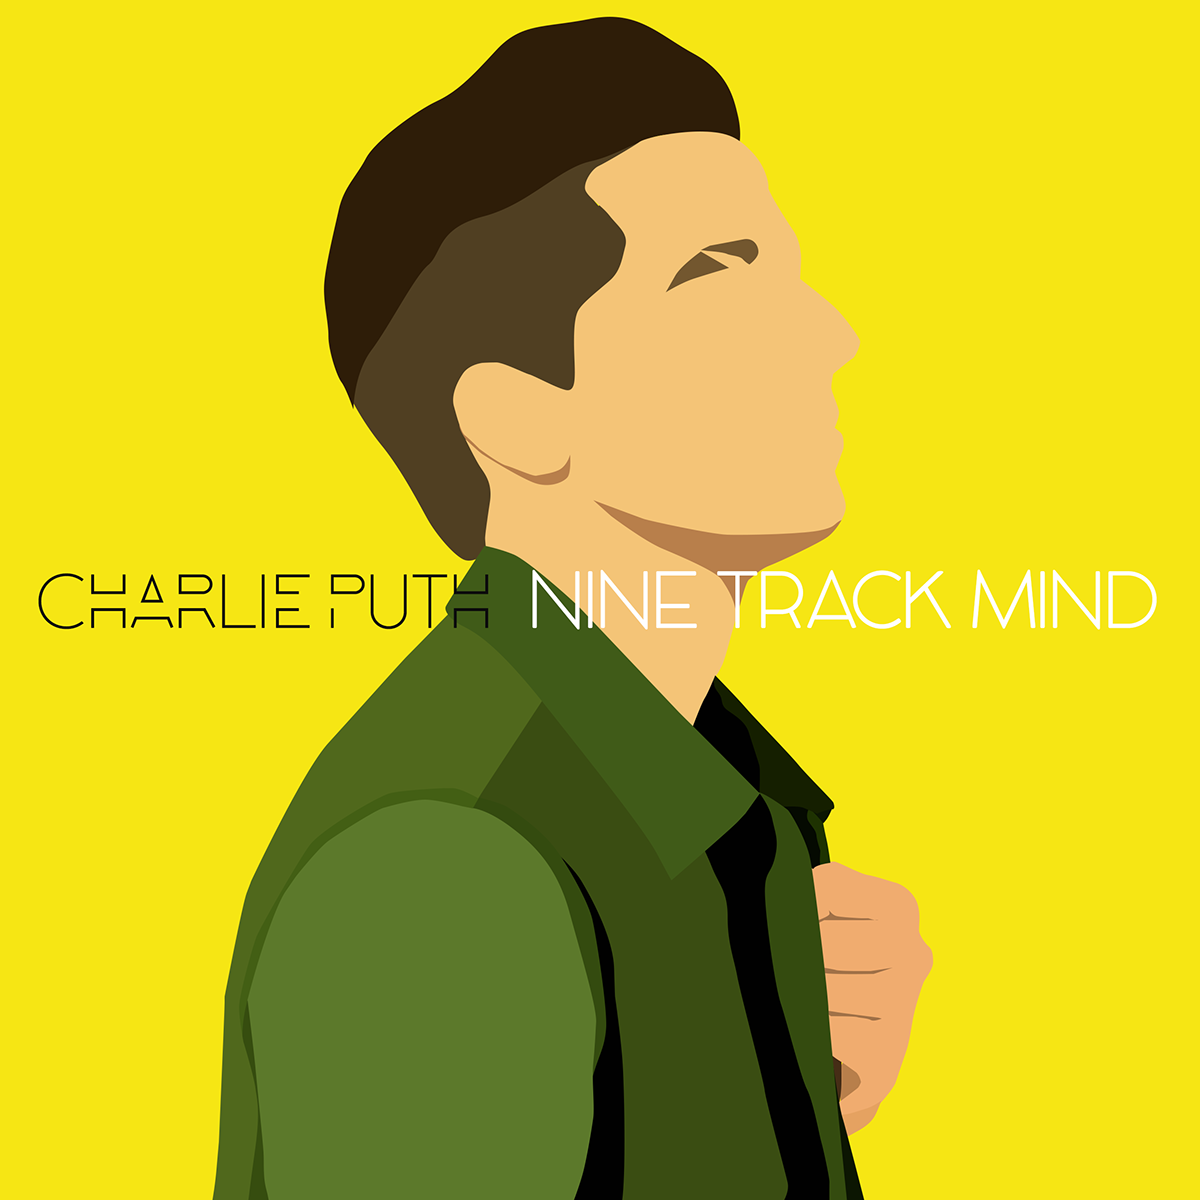 Charlie puth nine track mind